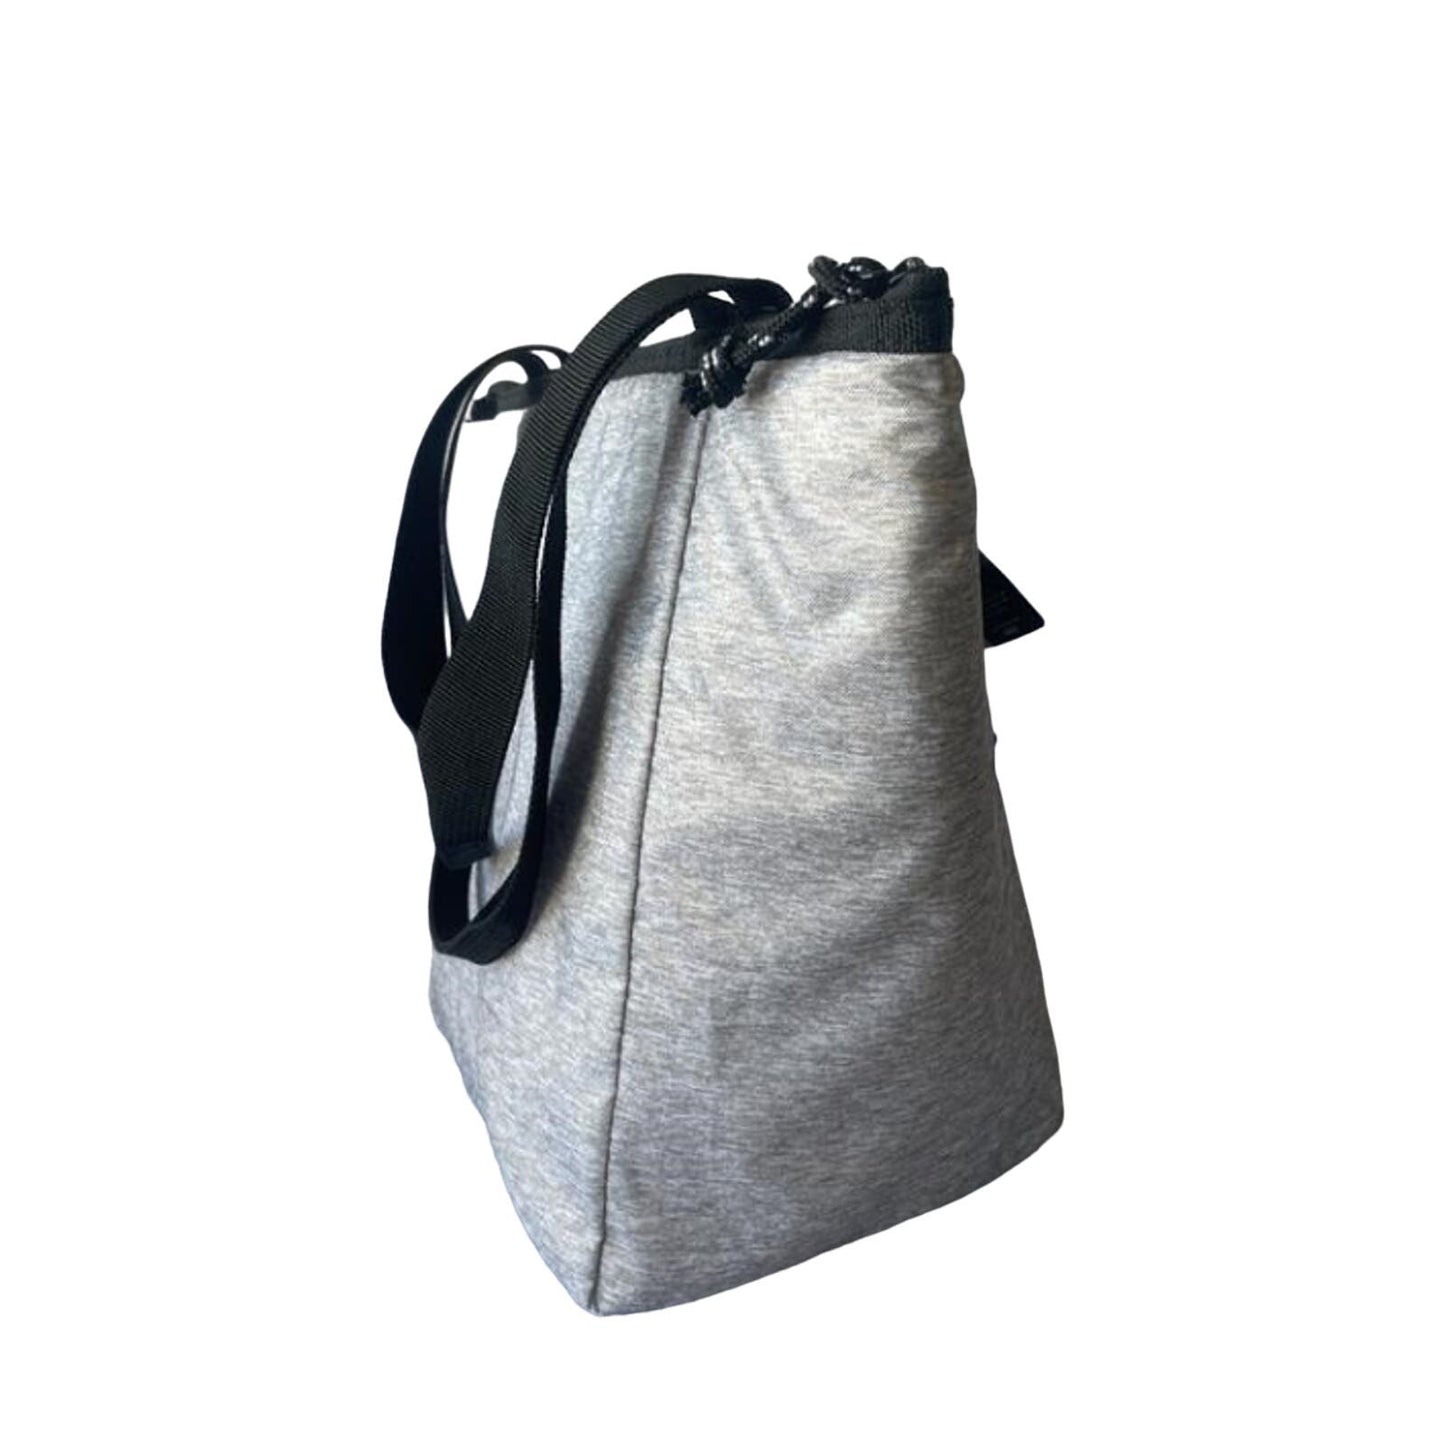 Igloo 12 Cans Cooler Bag Grey